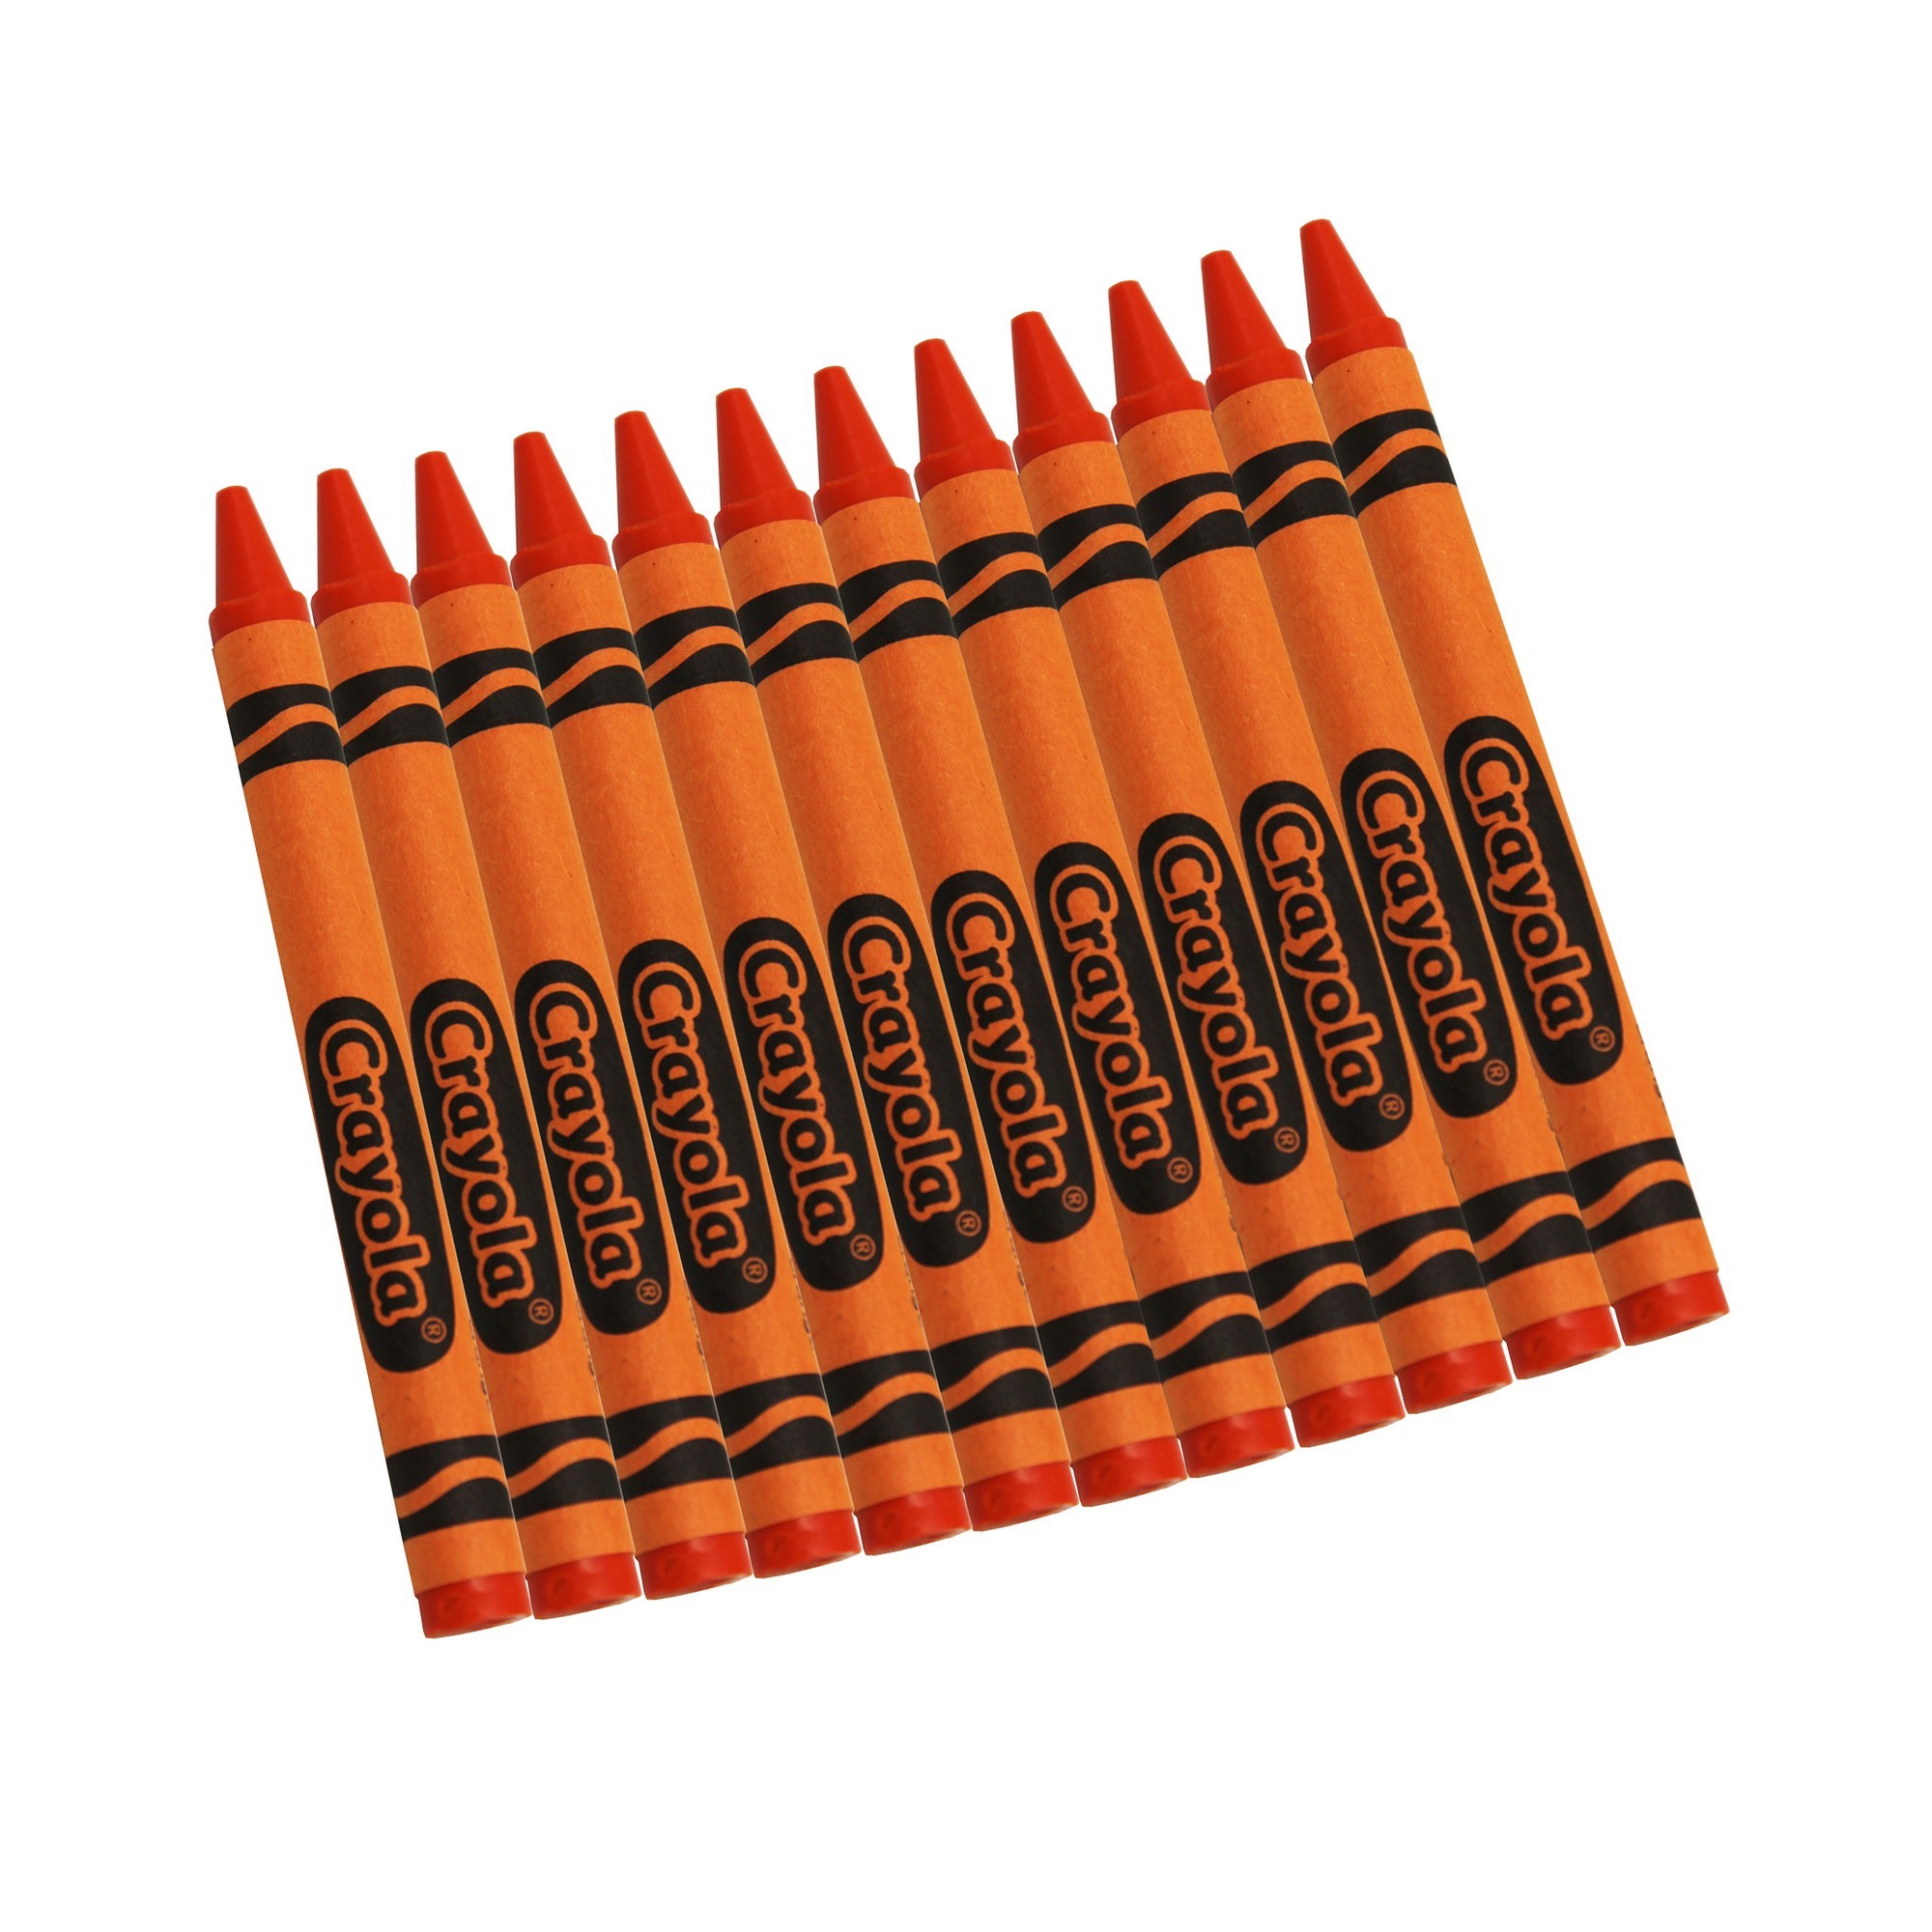 Bulk Crayons, Orange, Regular Size, 12 Count